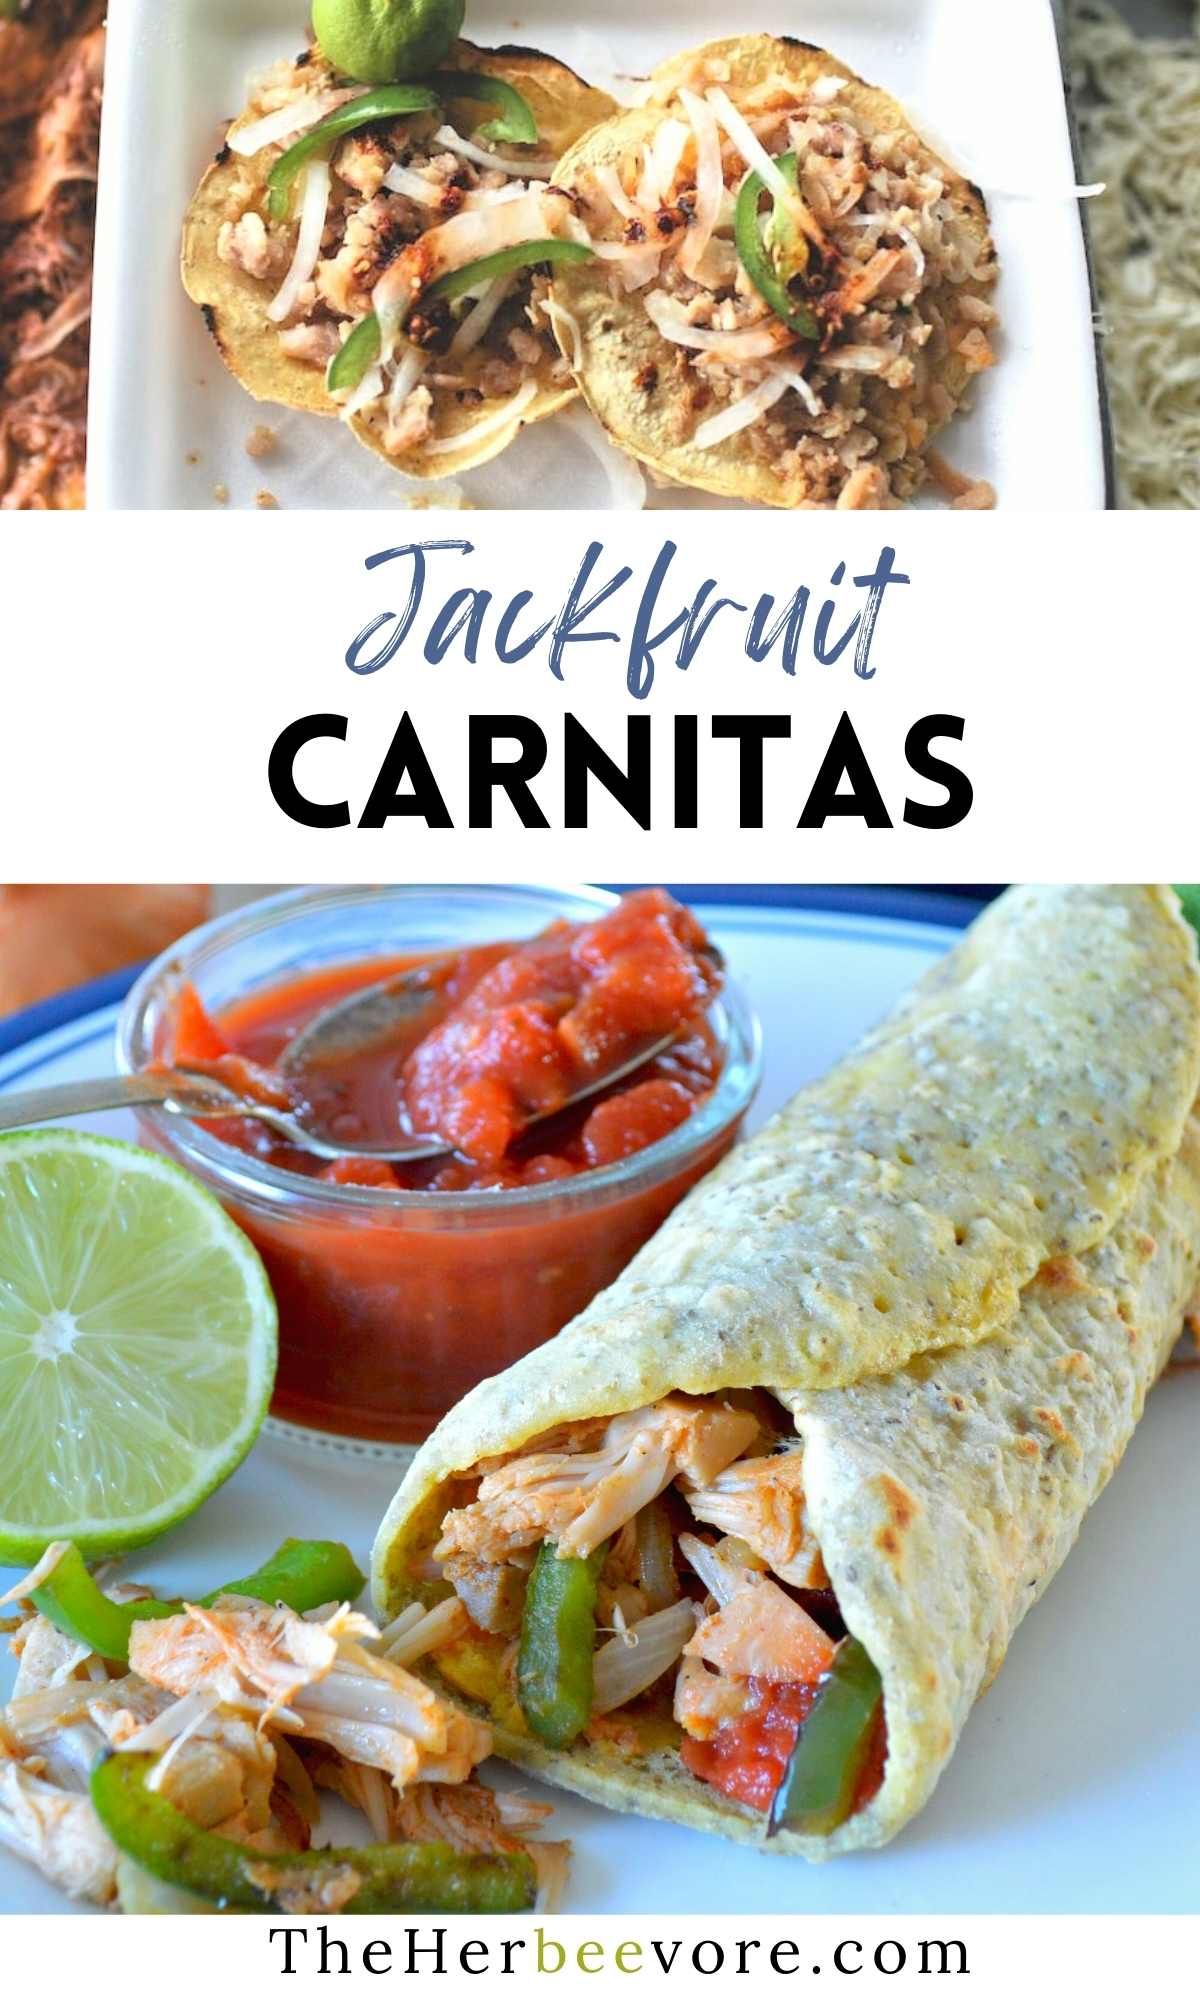 jackfruit carnitas dinner ideas with jackfruit canned jackfruit recipes easy vegan dinner ideas for taco tuesday